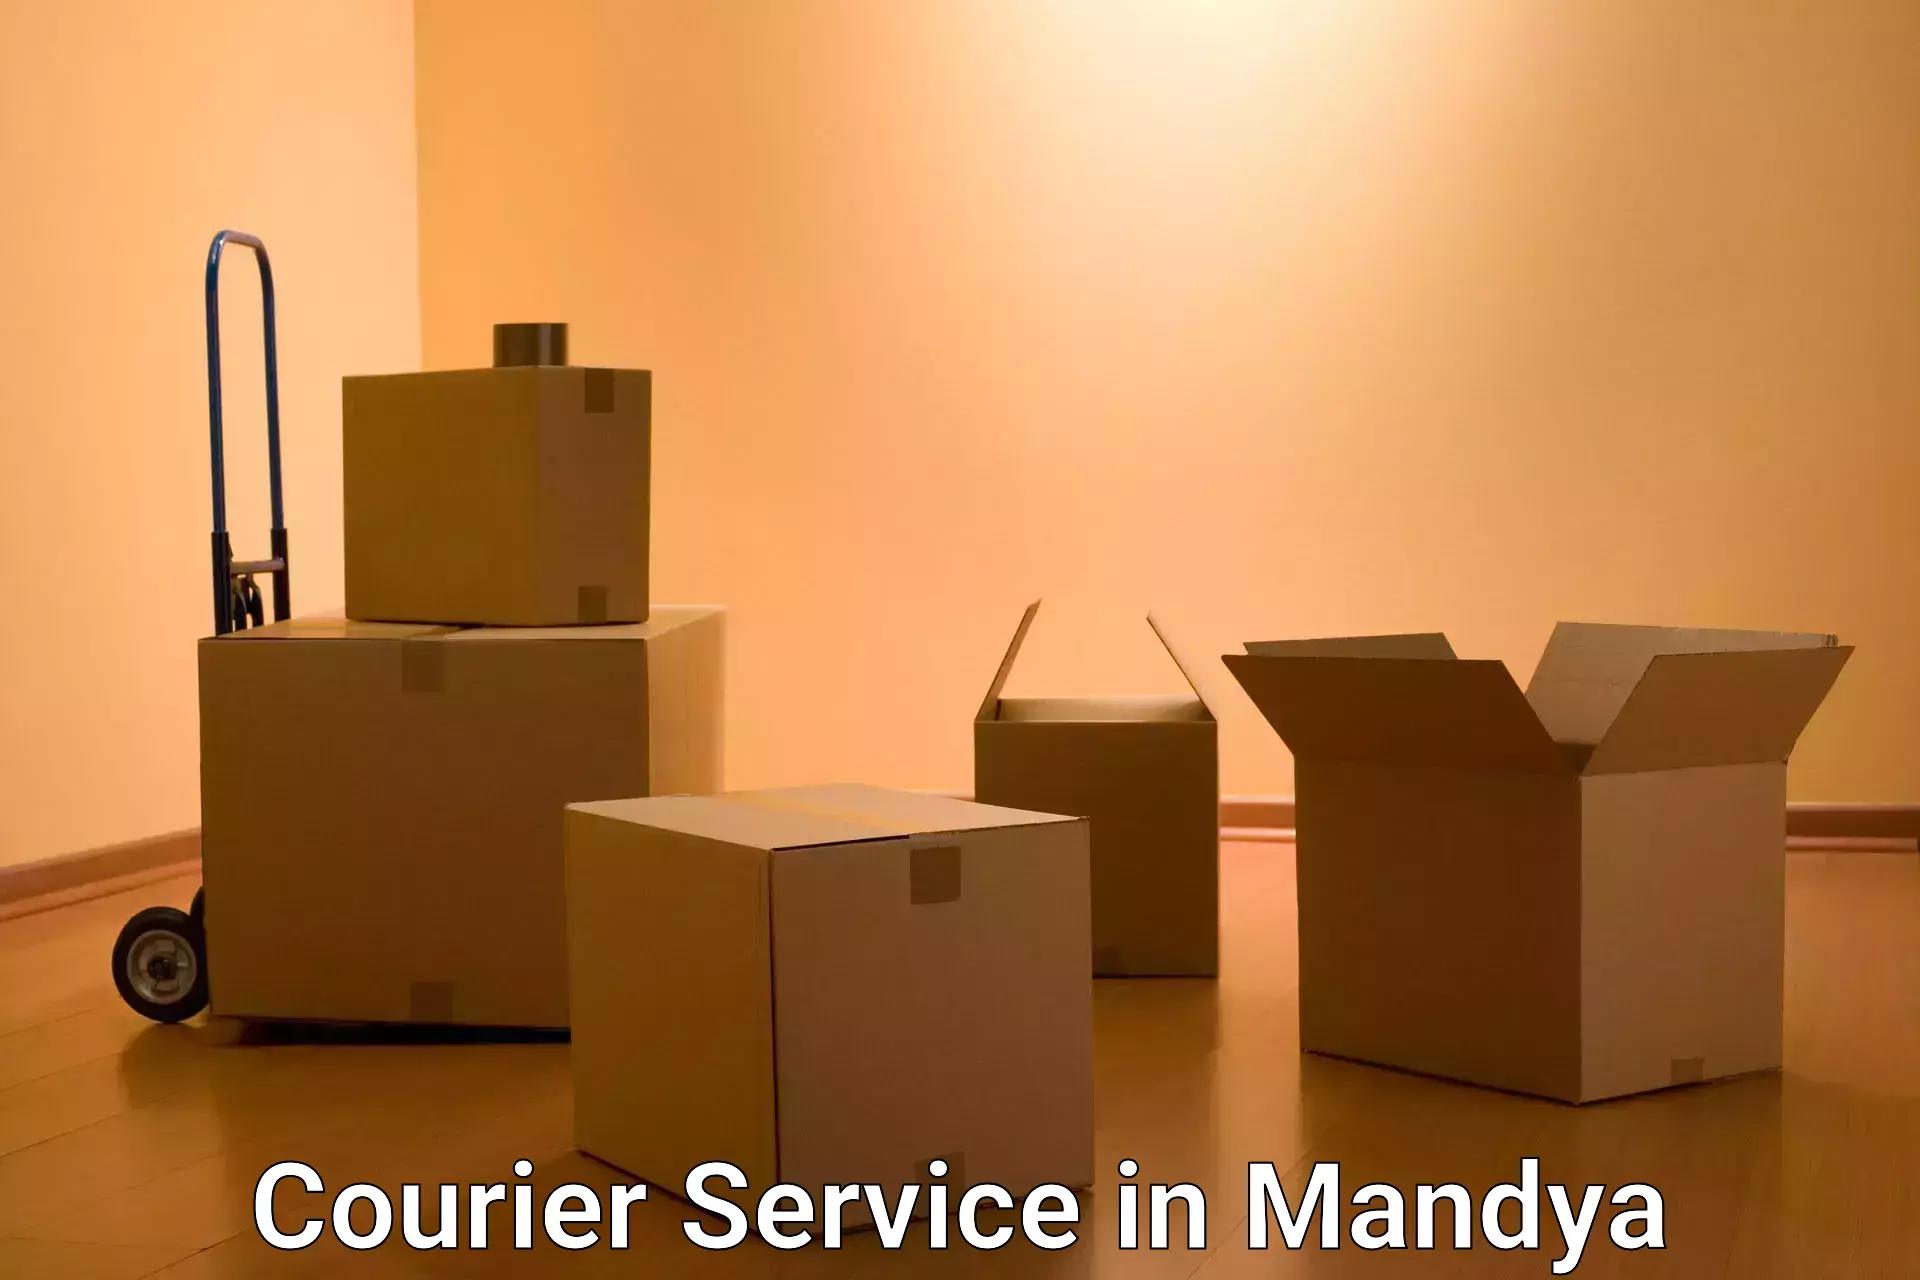 Quick dispatch service in Mandya